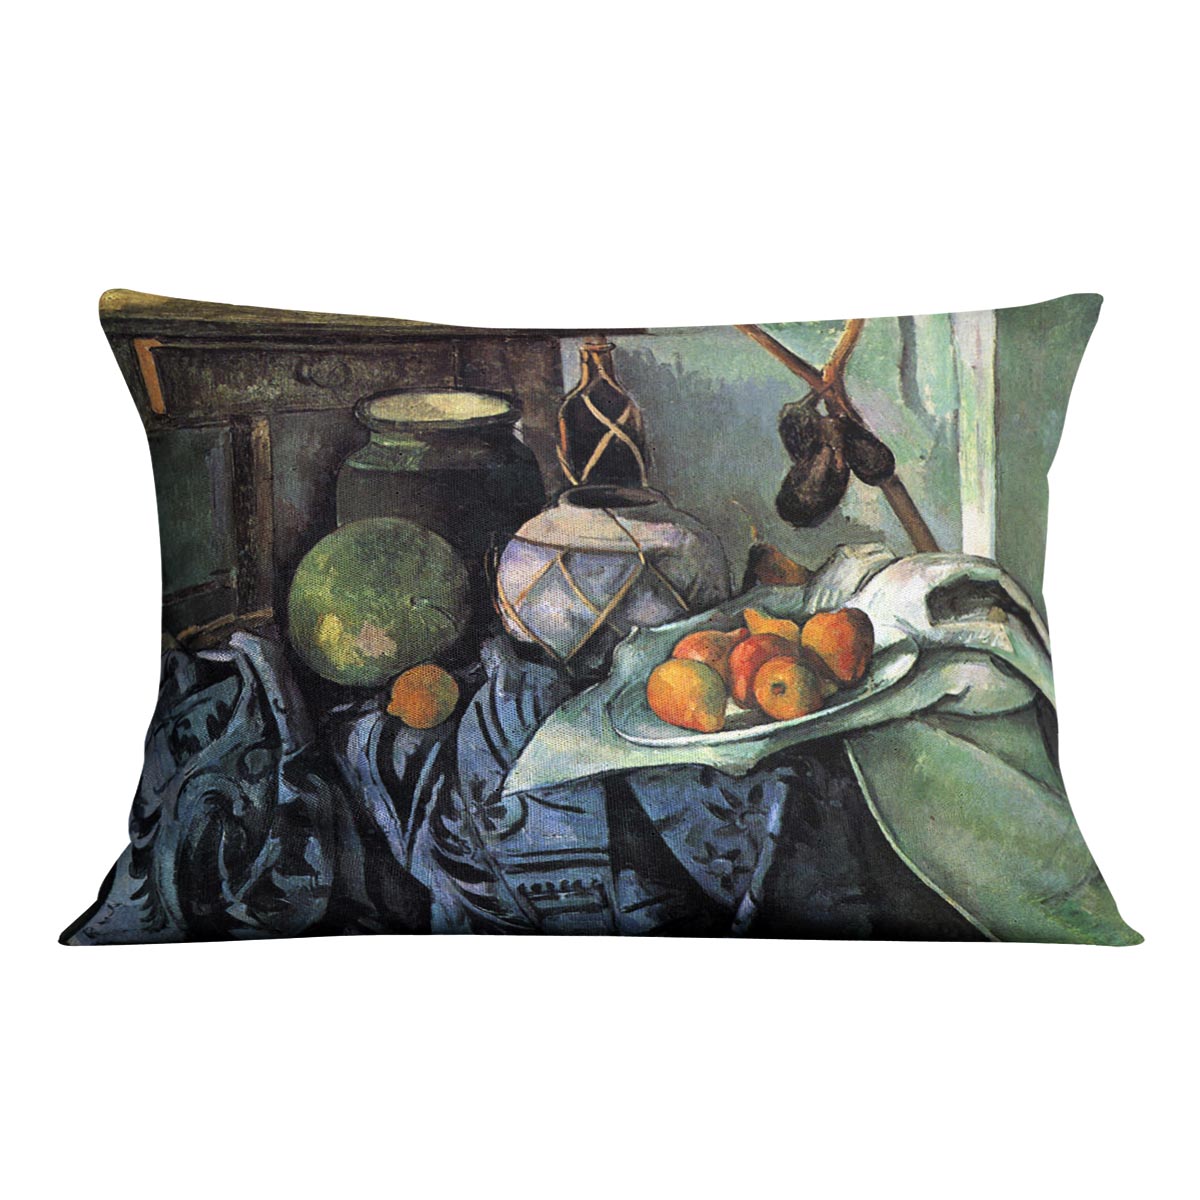 Still life with Eggplant by Cezanne Cushion